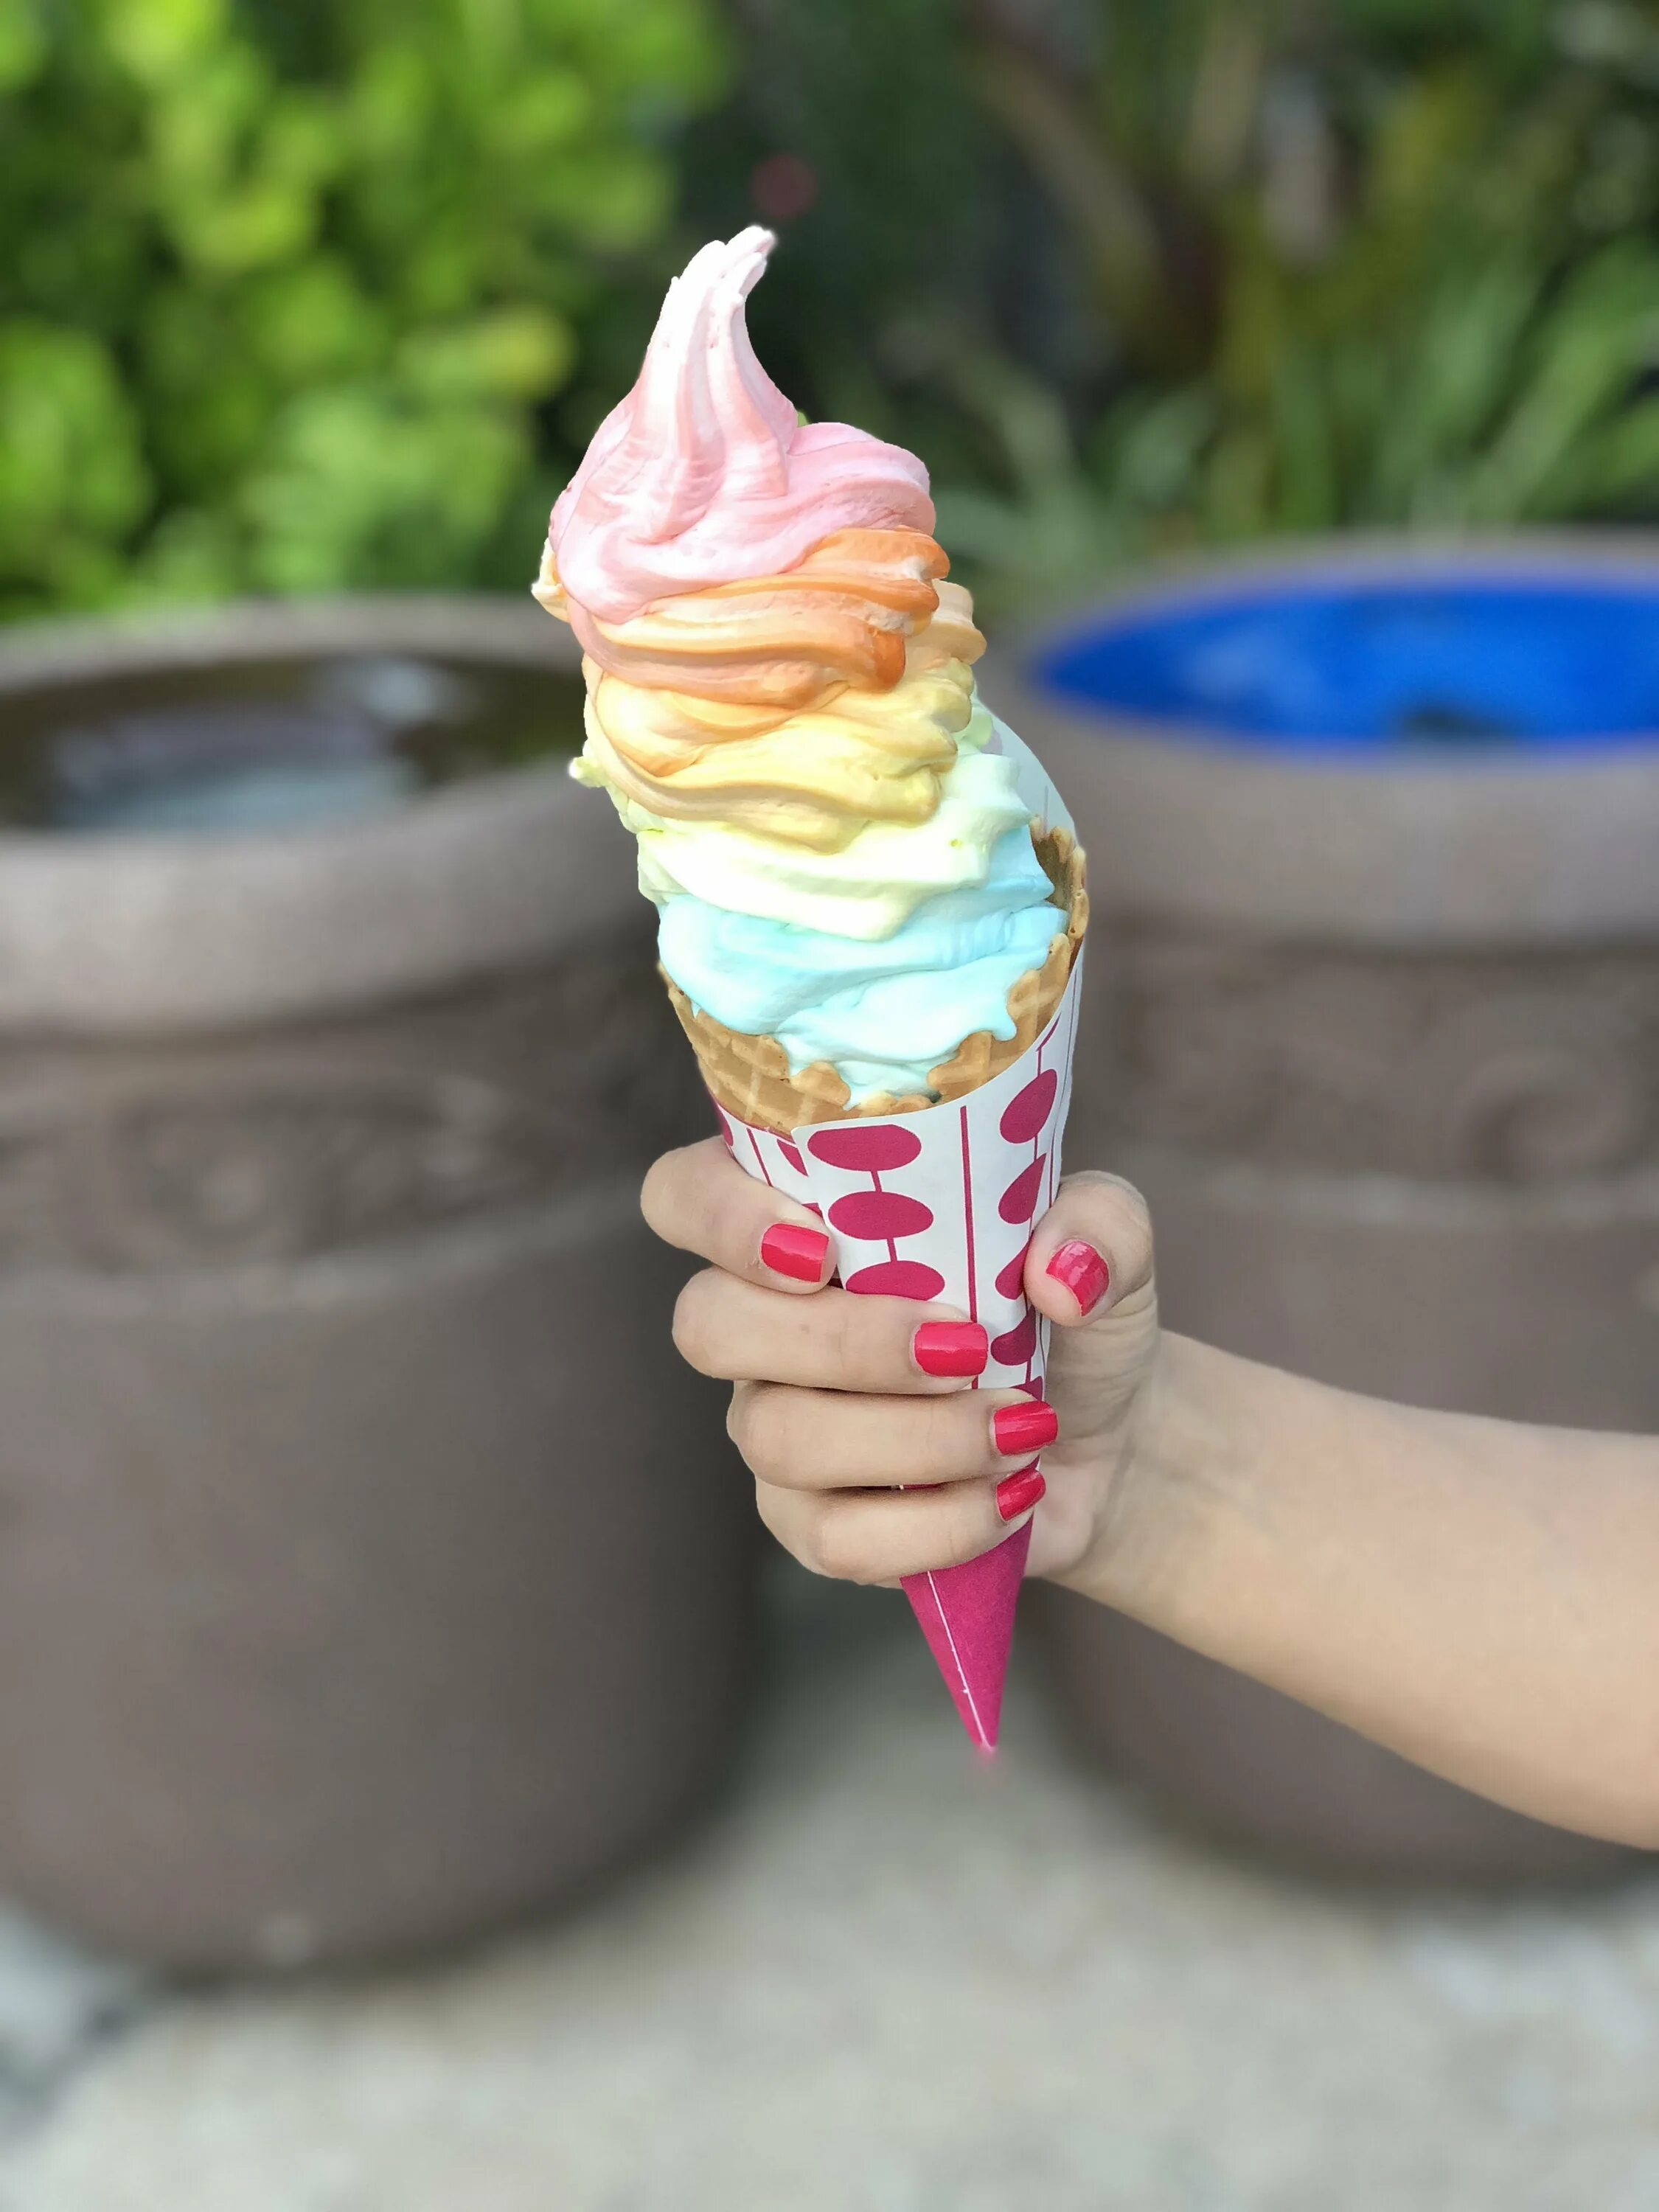 Мороженка. Красивое мороженое. Мороженое рожок. Мягкое мороженое. Разноцветное мороженое.